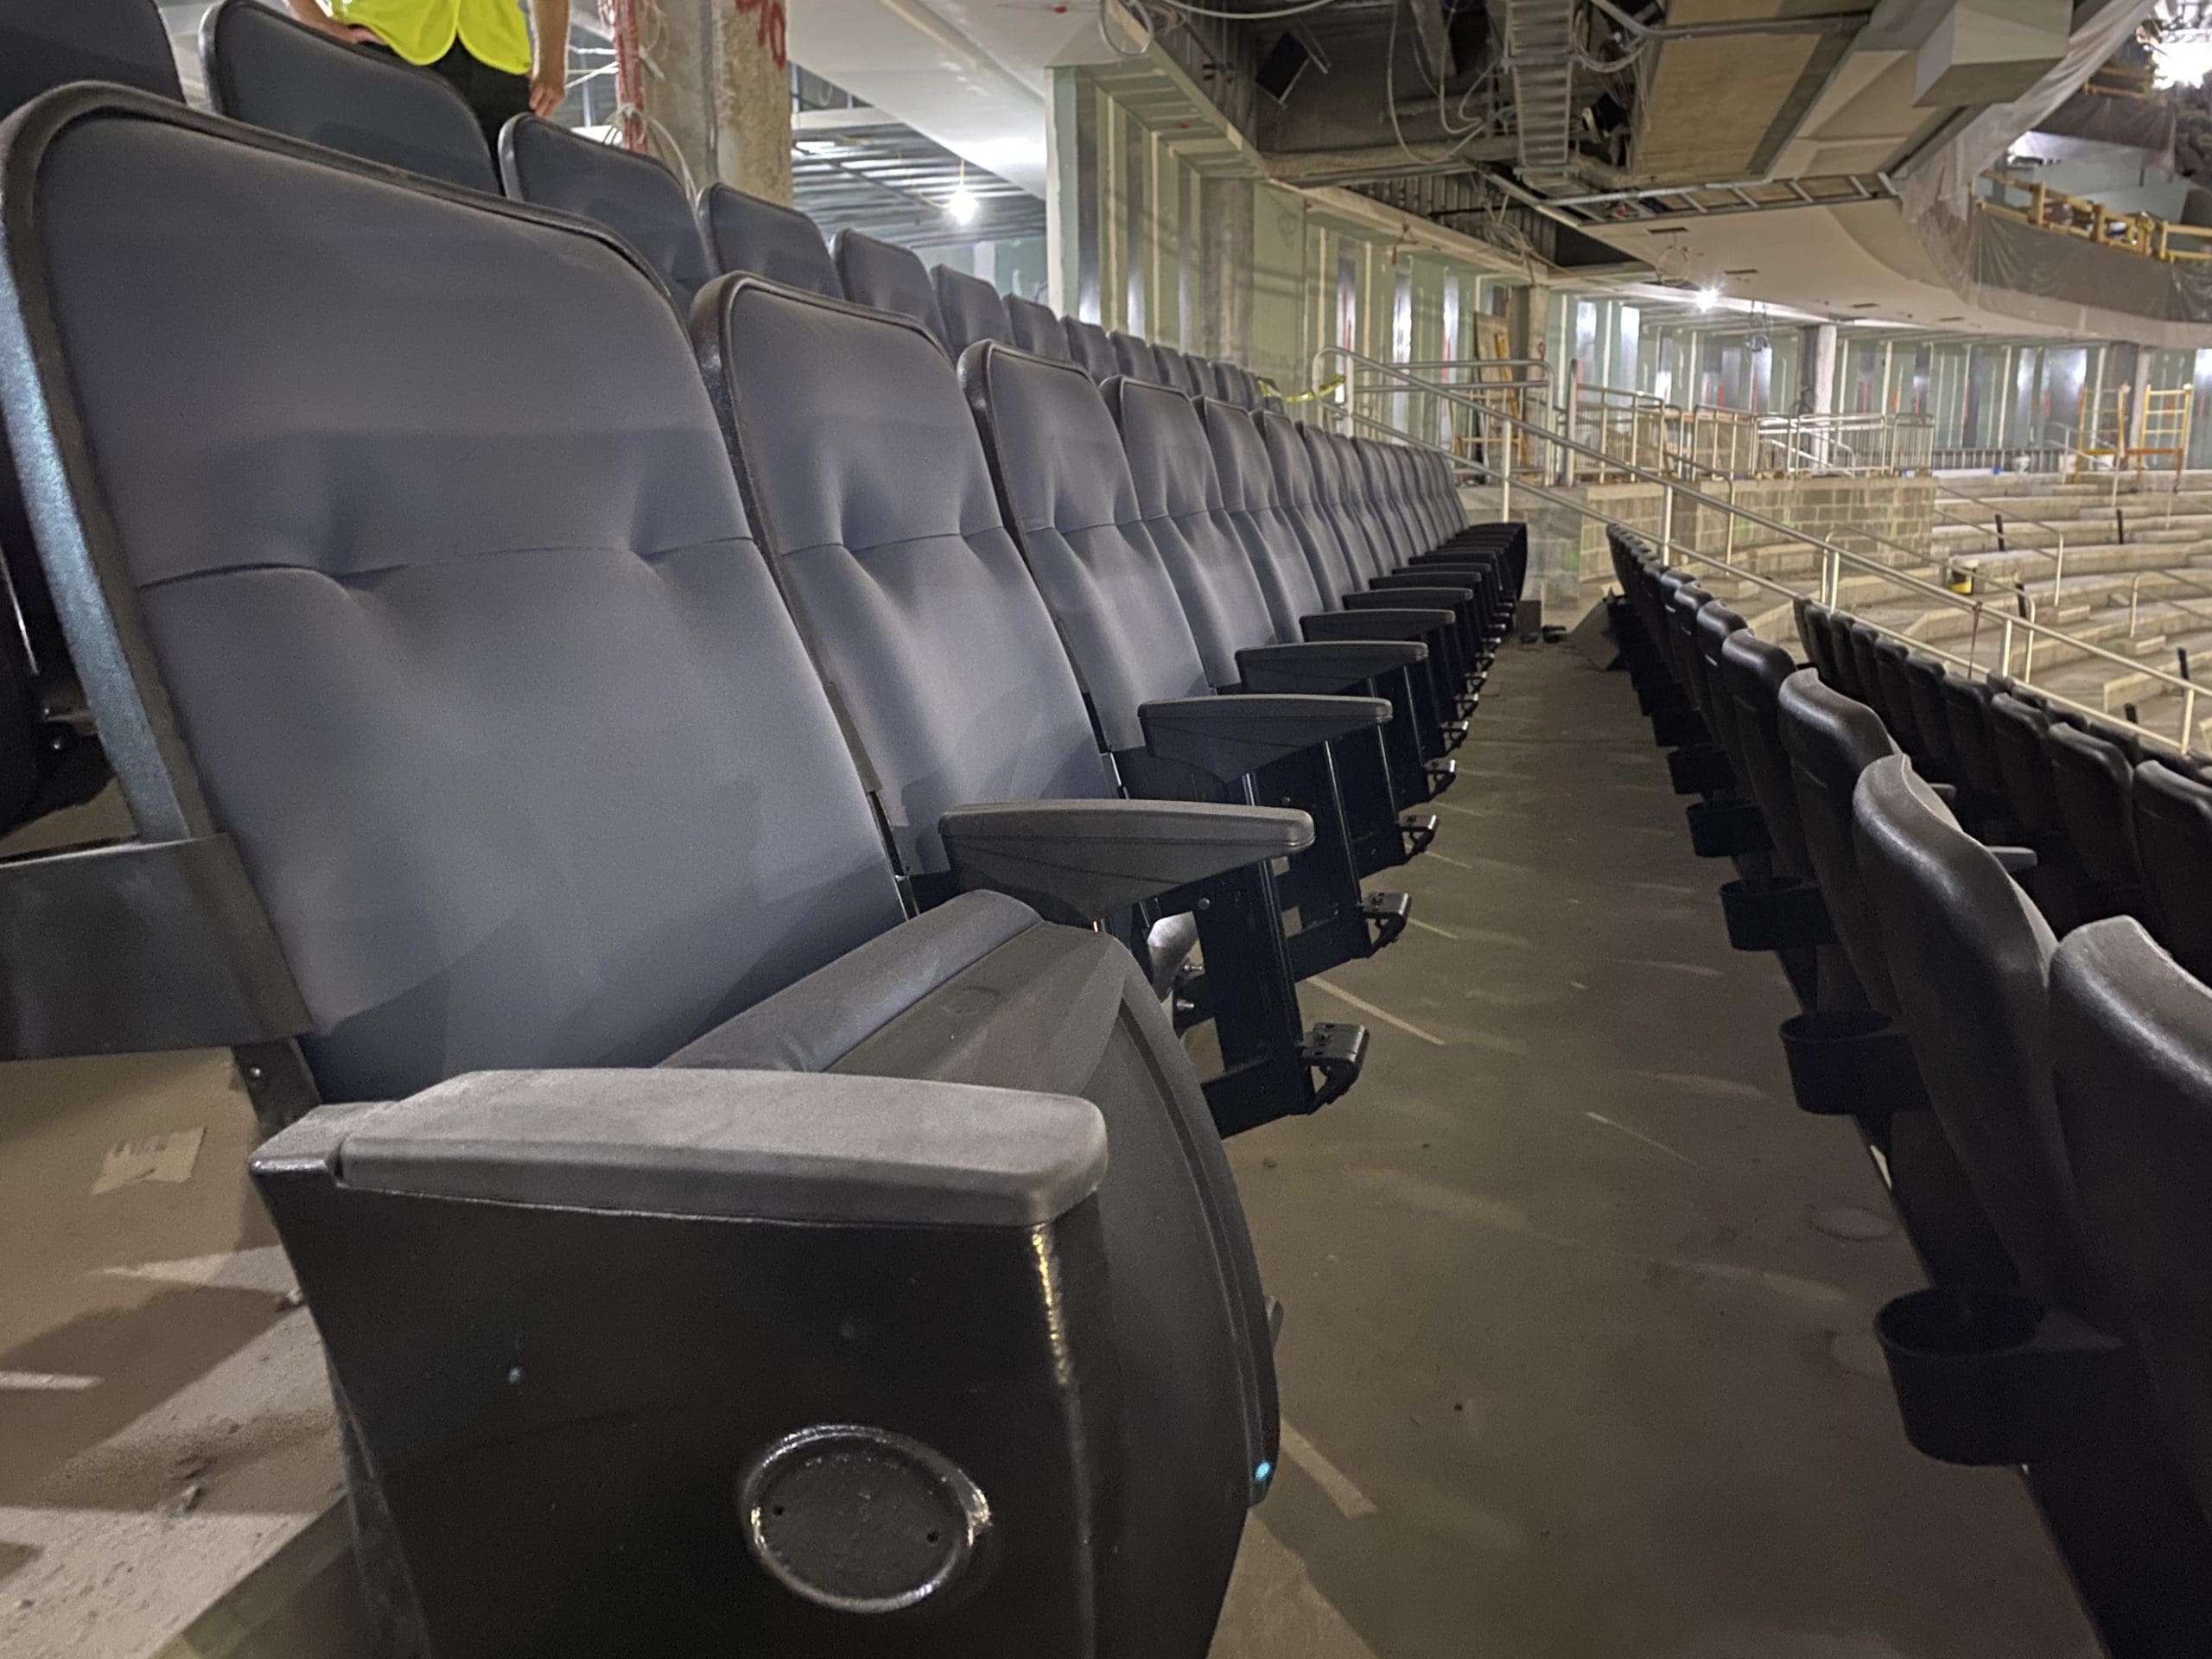 UBS Arena seats